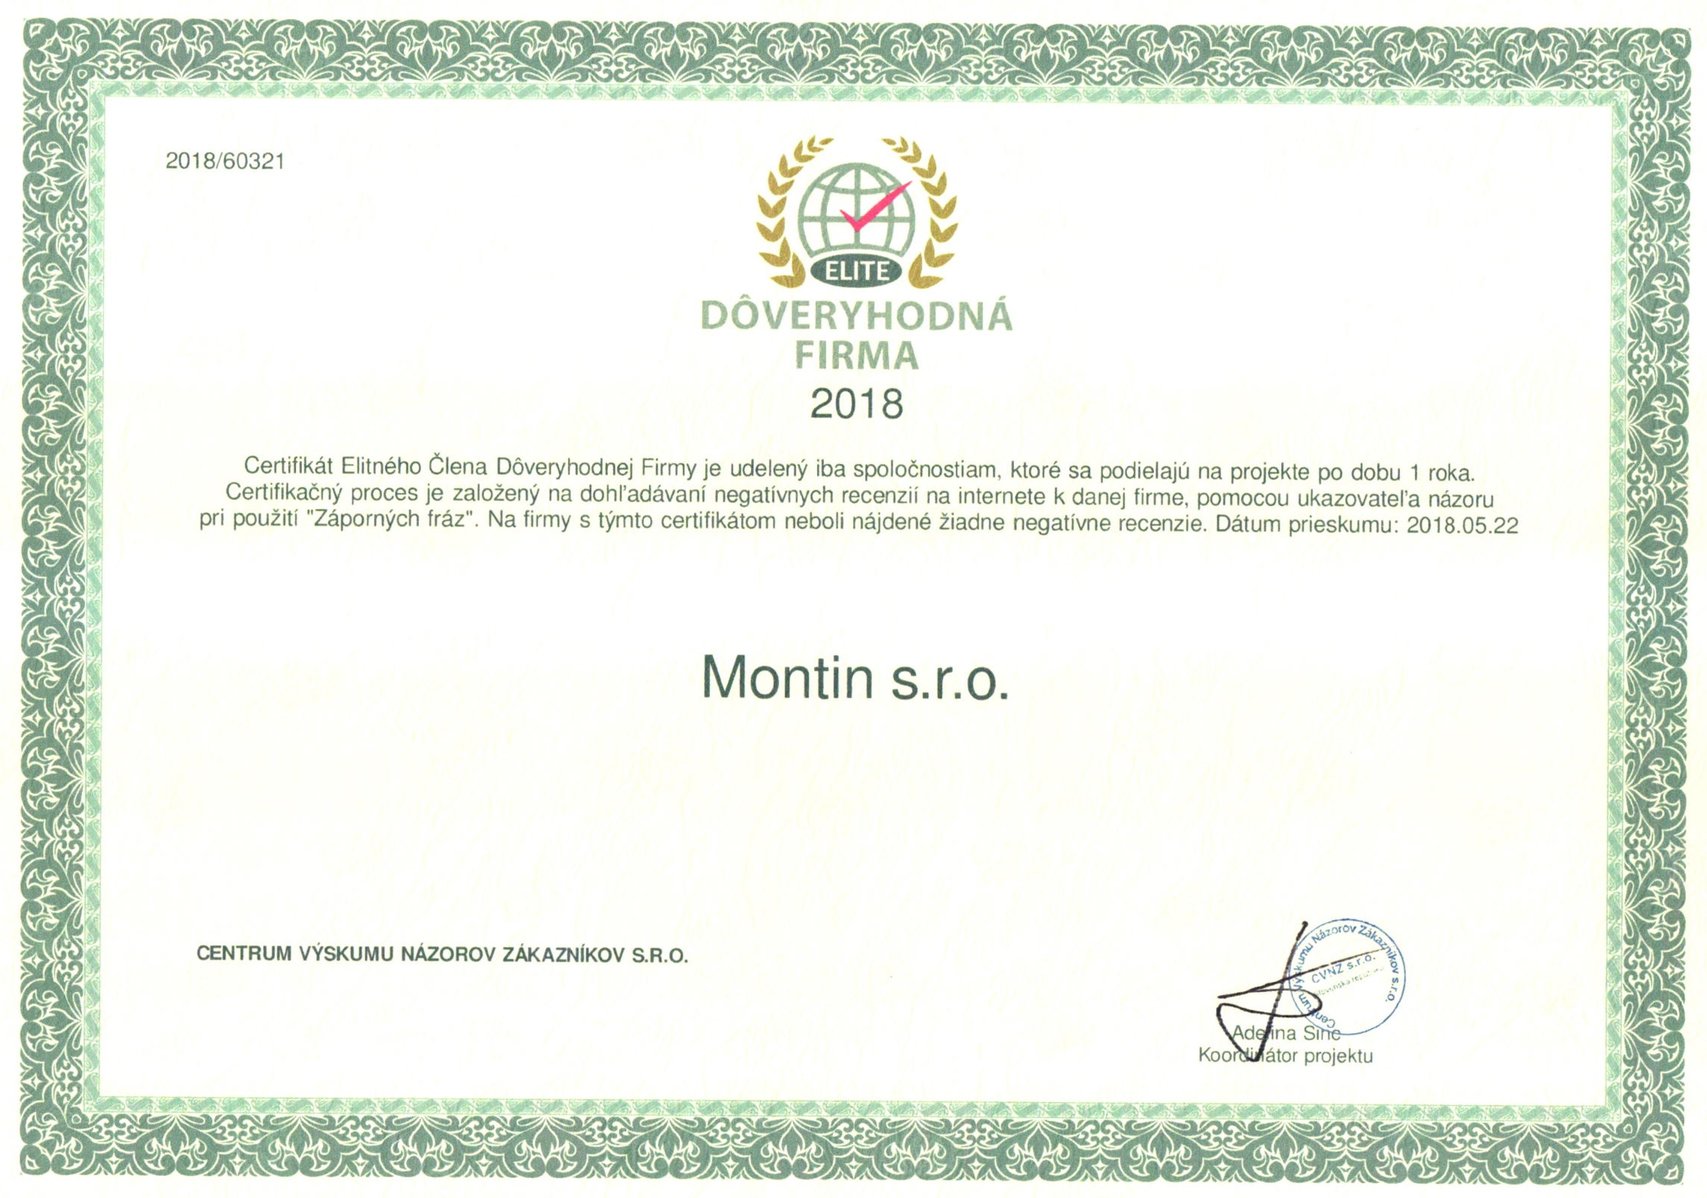 Certificate of Elite Trustworthy Company Member 2018